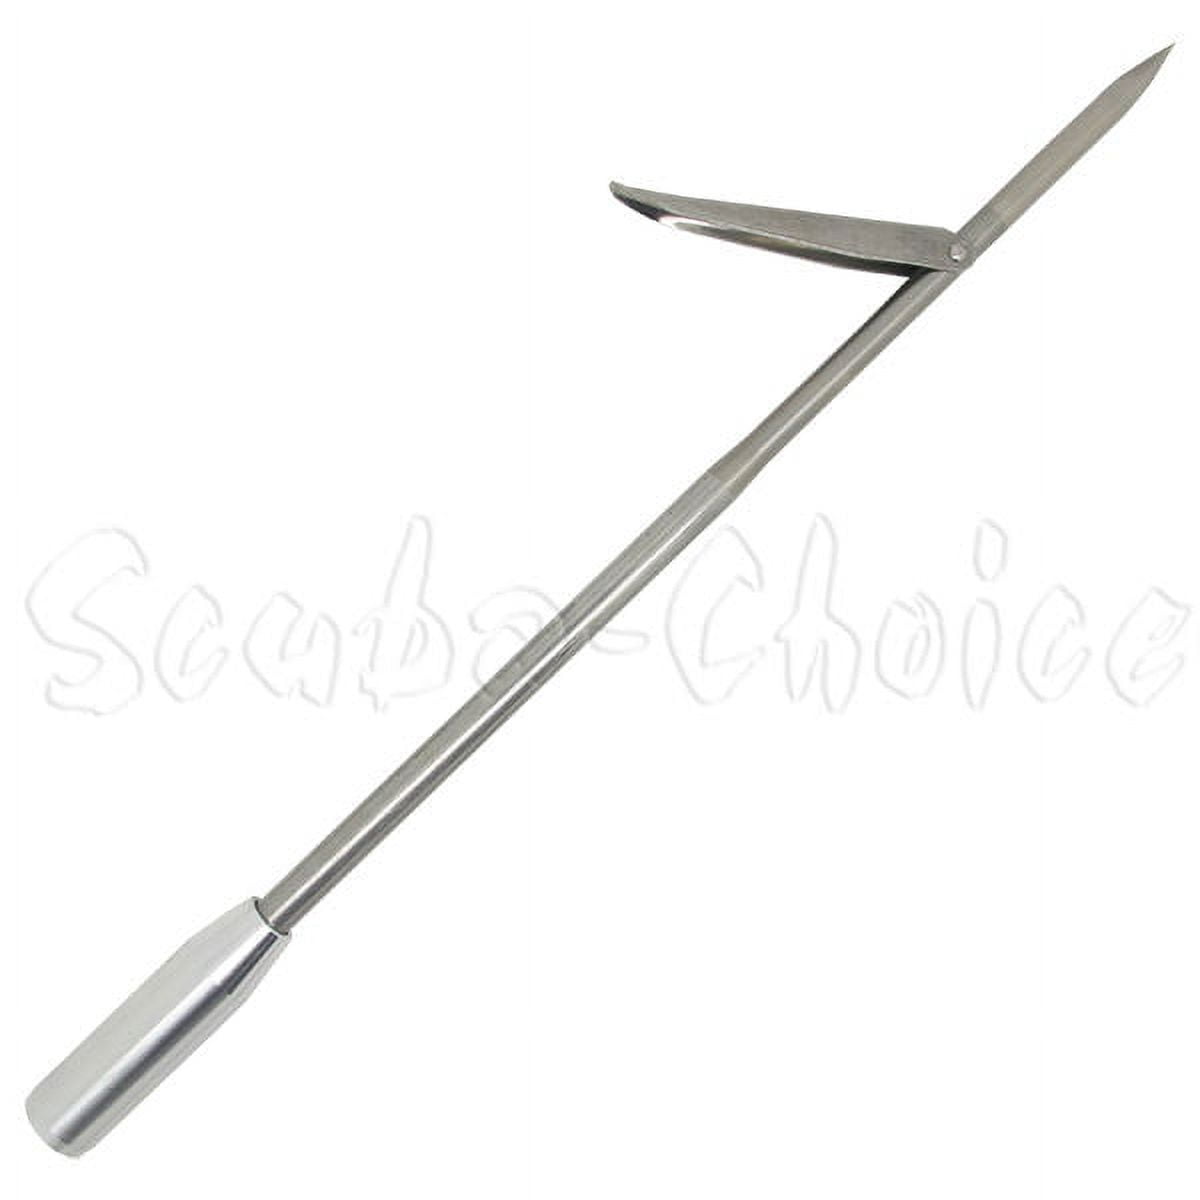 Scuba Choice Spearfishing 12 Stainless Steel Pole Spear Tip Single Barb Head